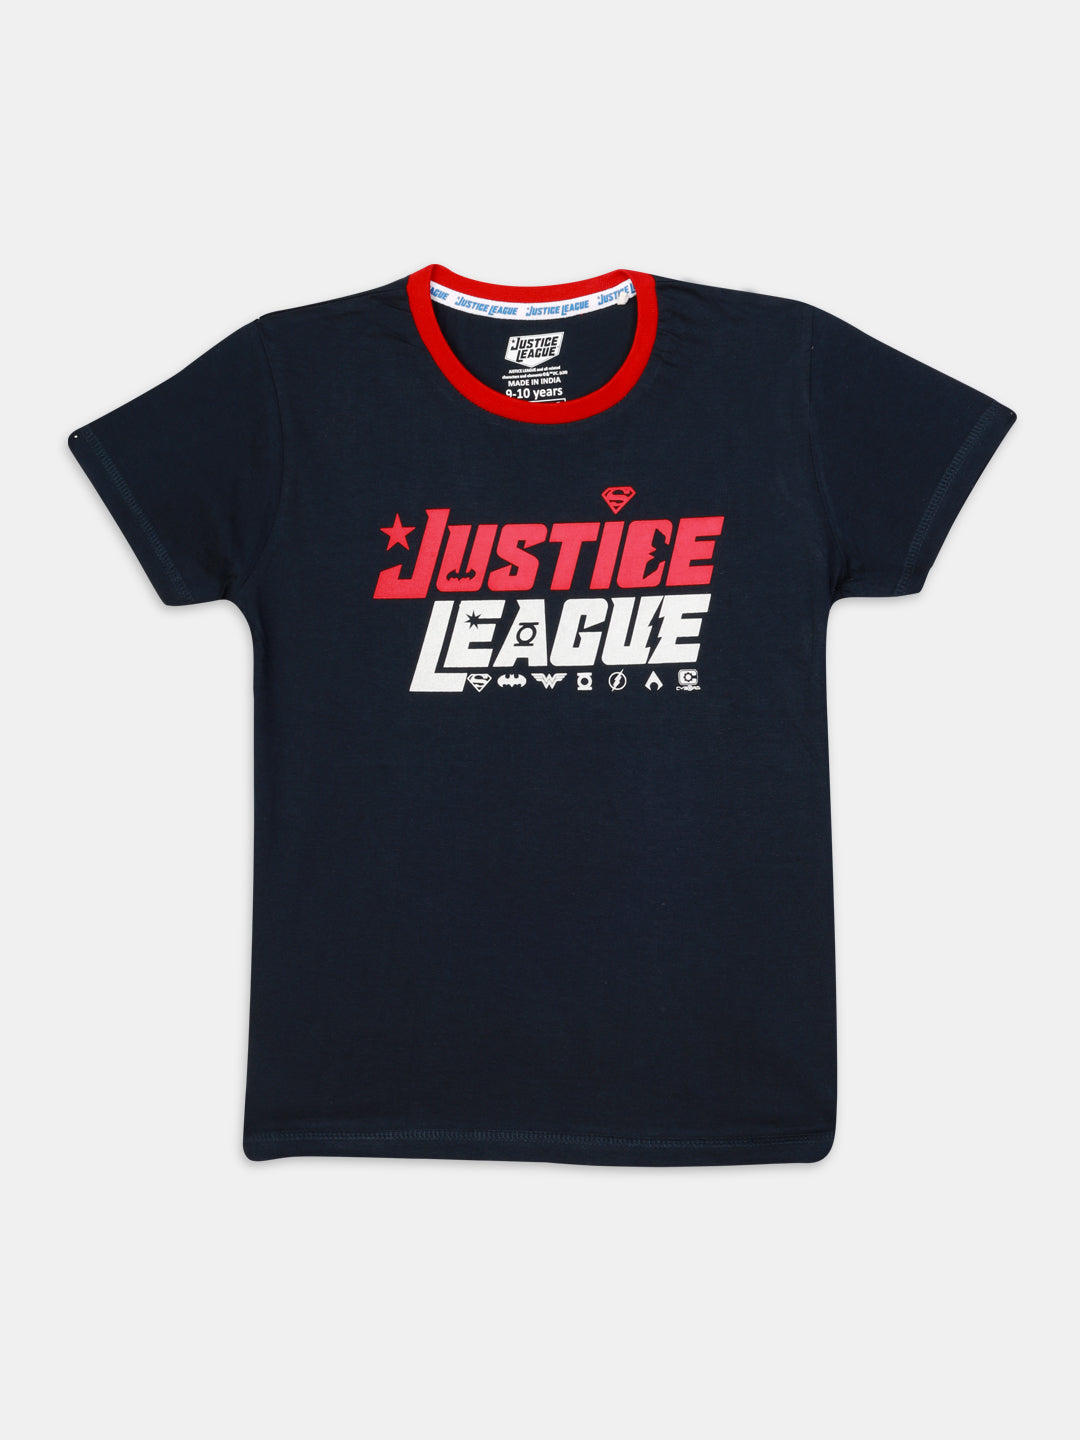 justice league logo tshirt